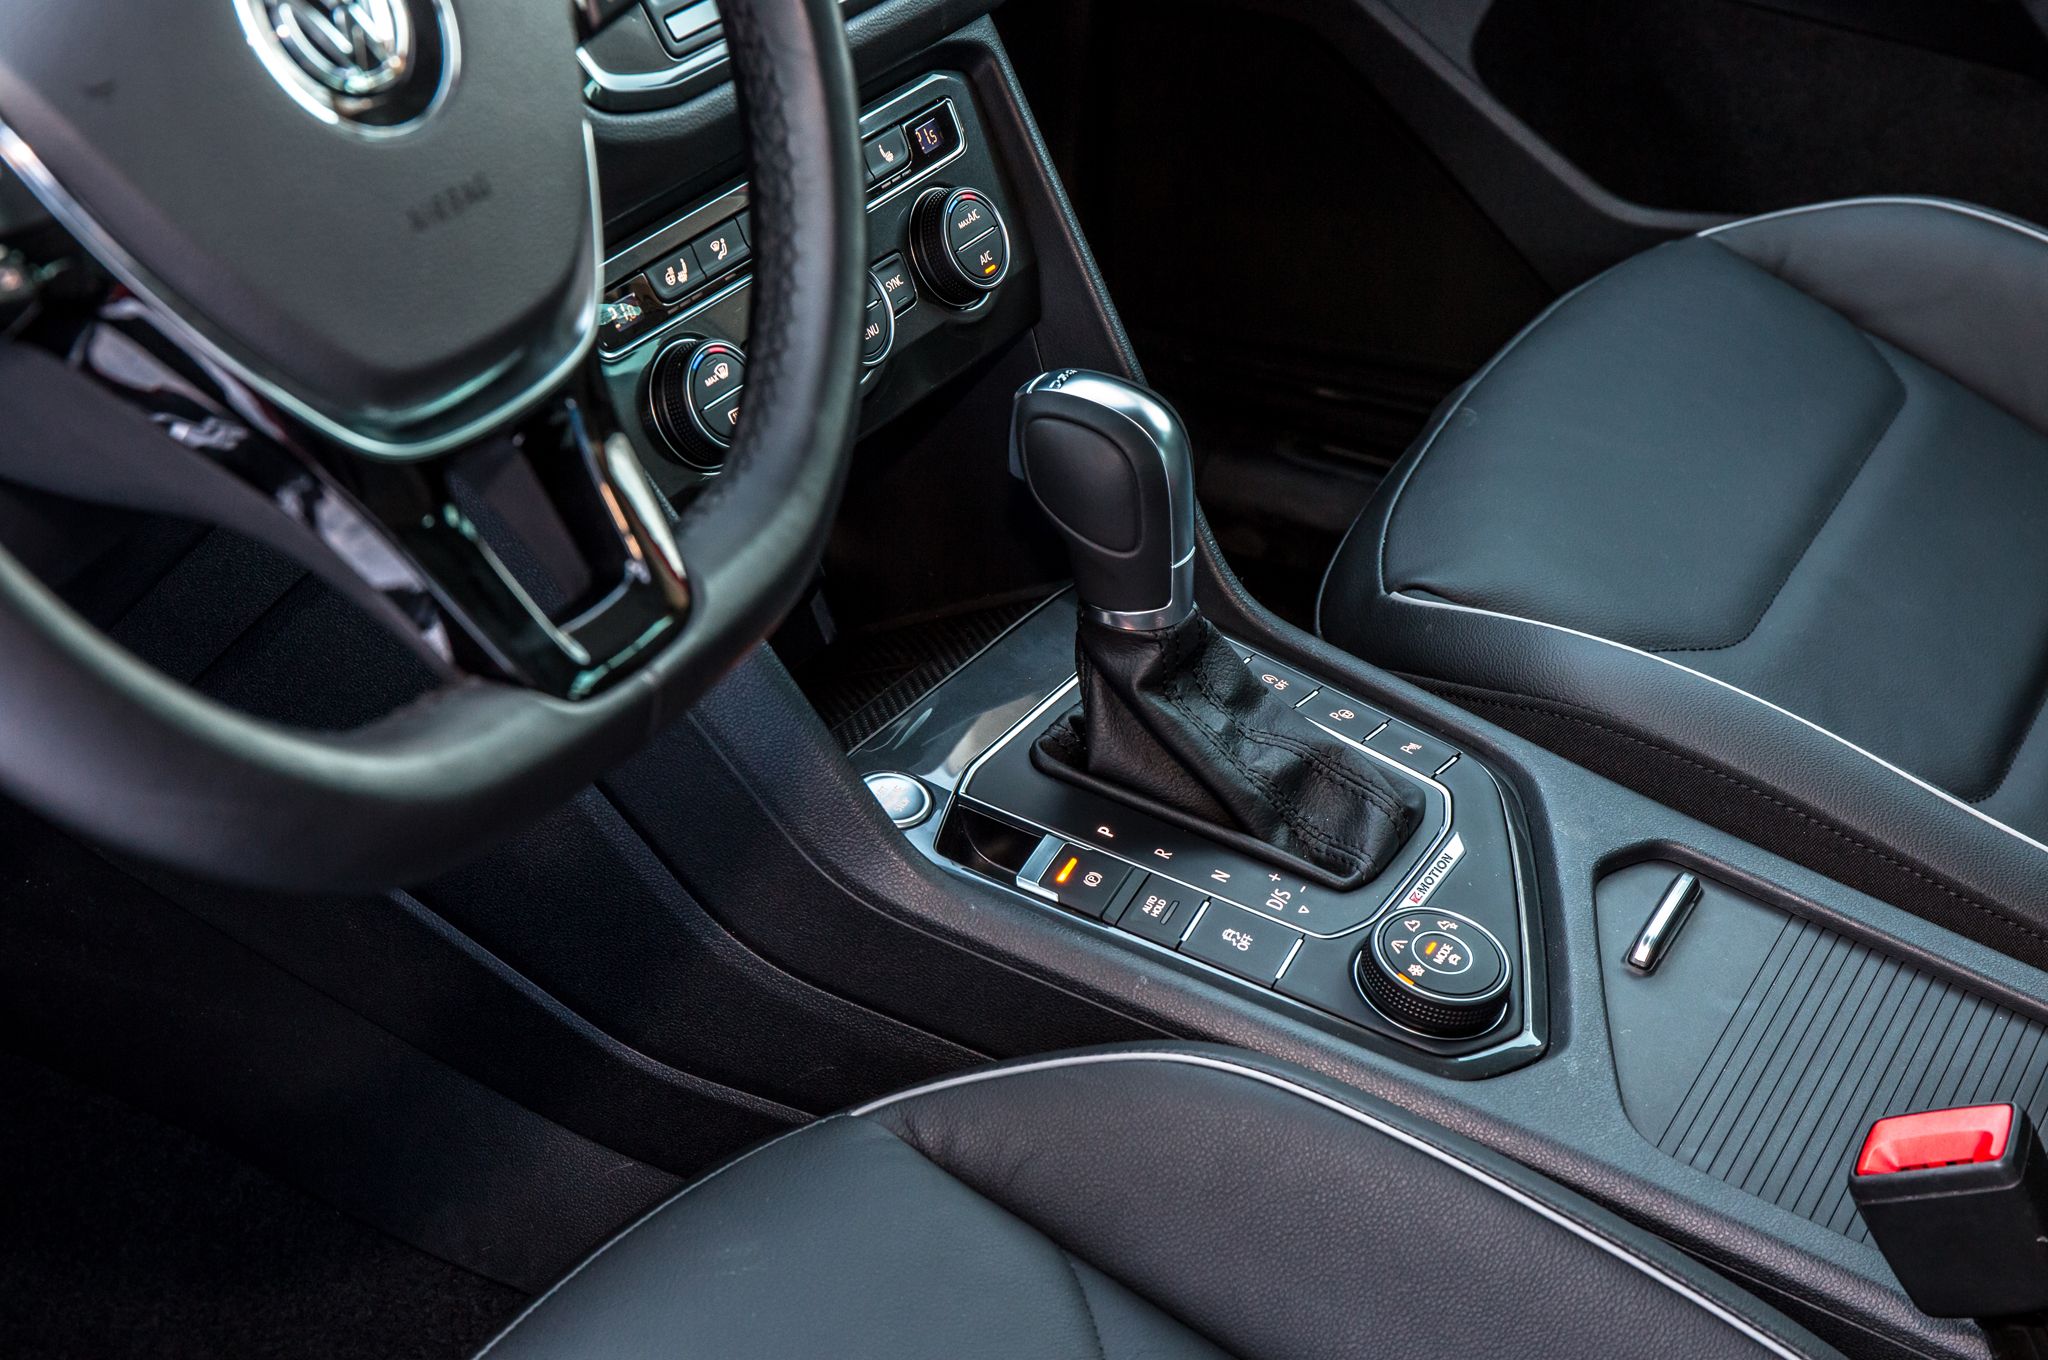 2017 Volkswagen Tiguan Interior View Gear Shift Knob (View 16 of 27)